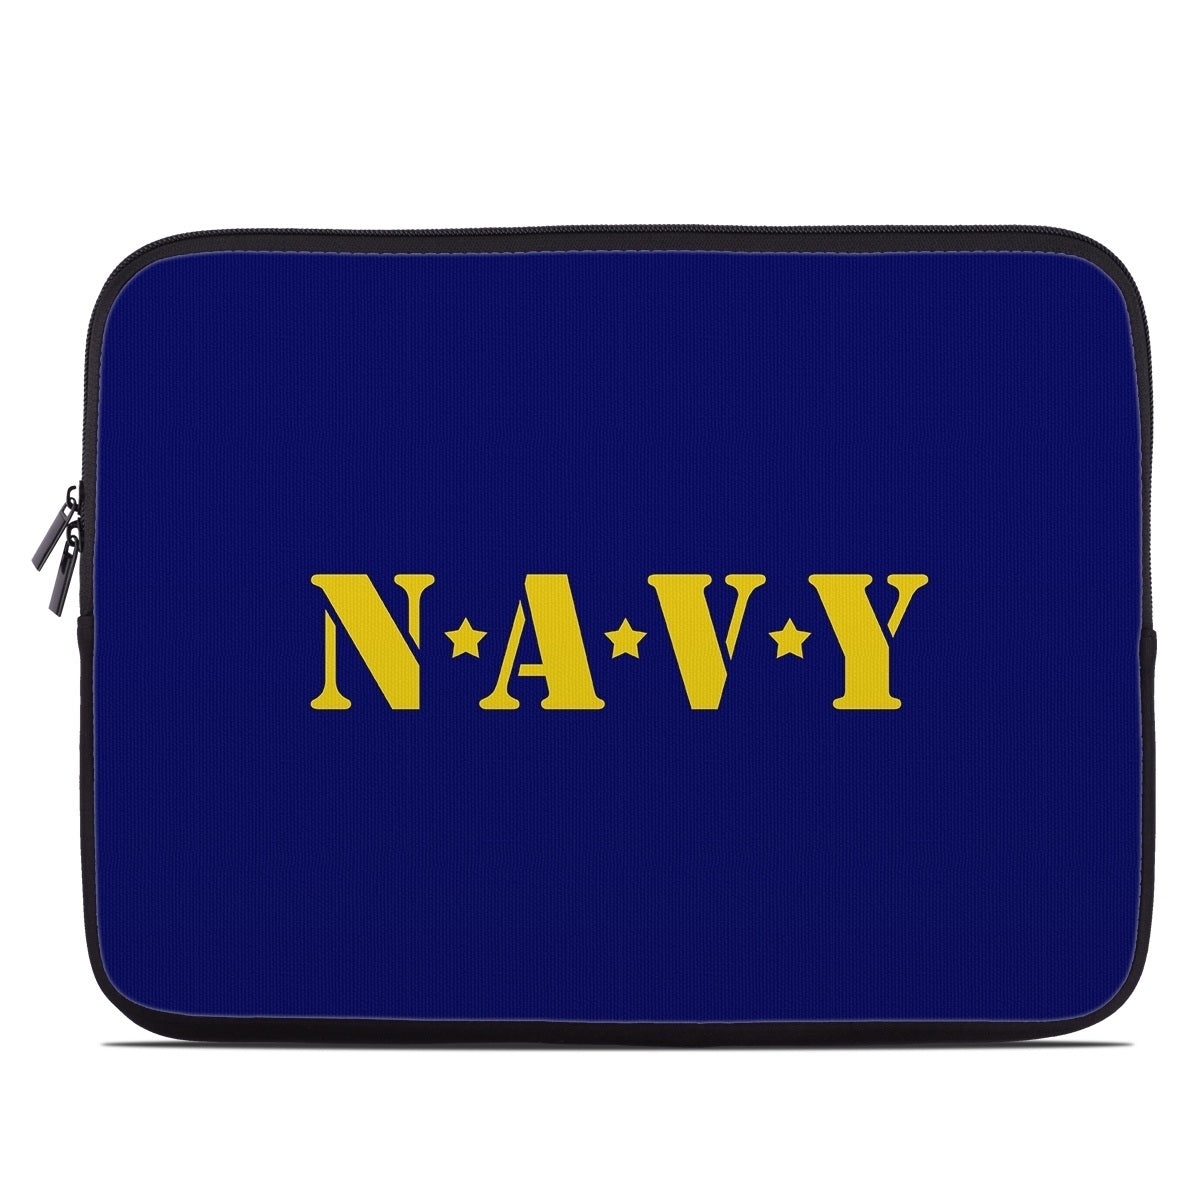 Navy - Laptop Sleeve